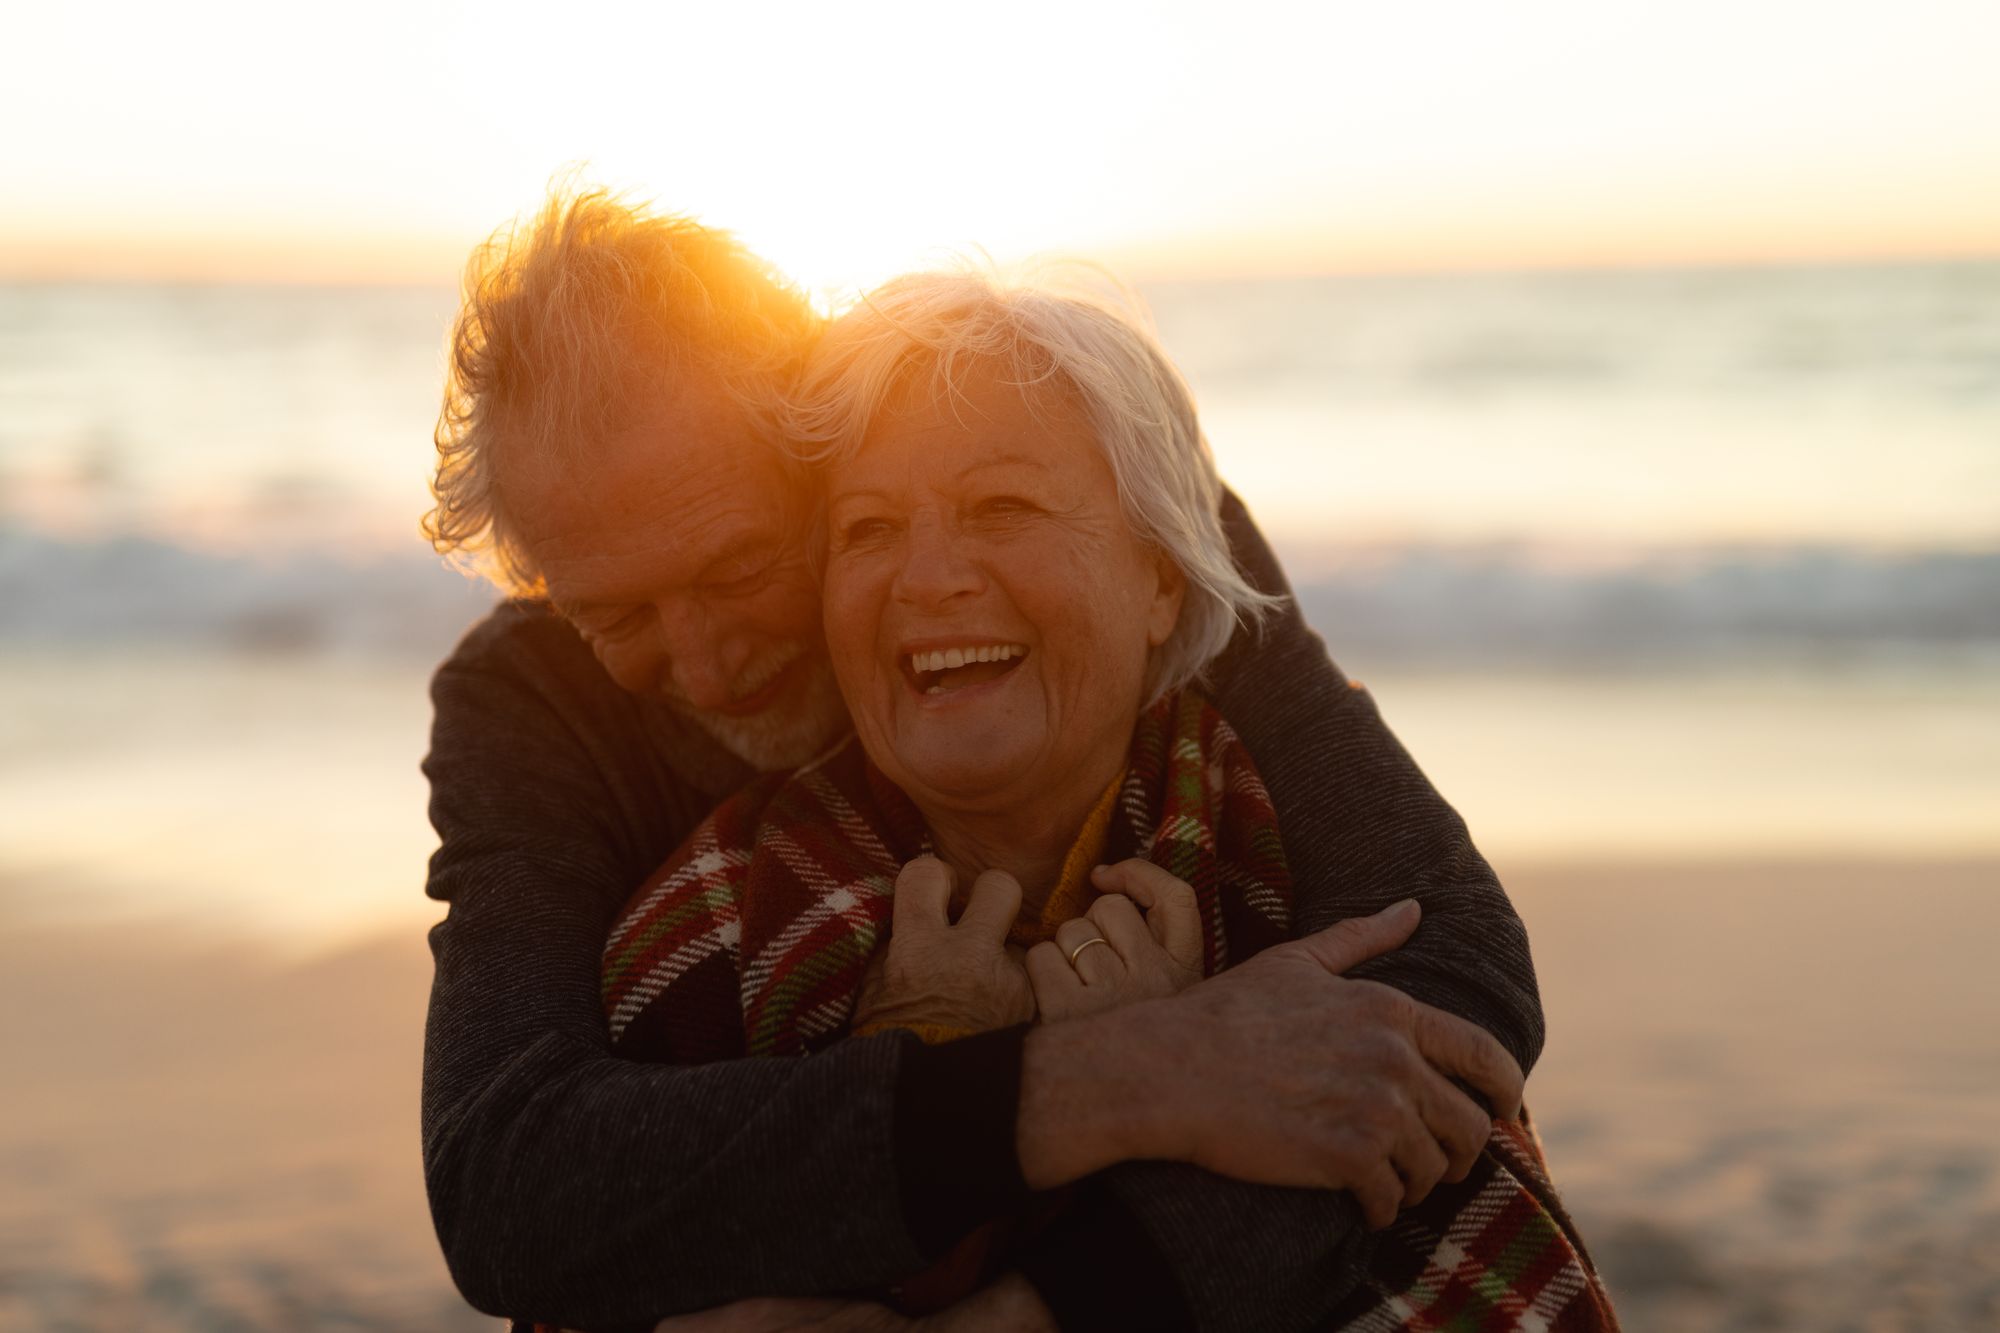 Älteres Paar glücklich am Strand